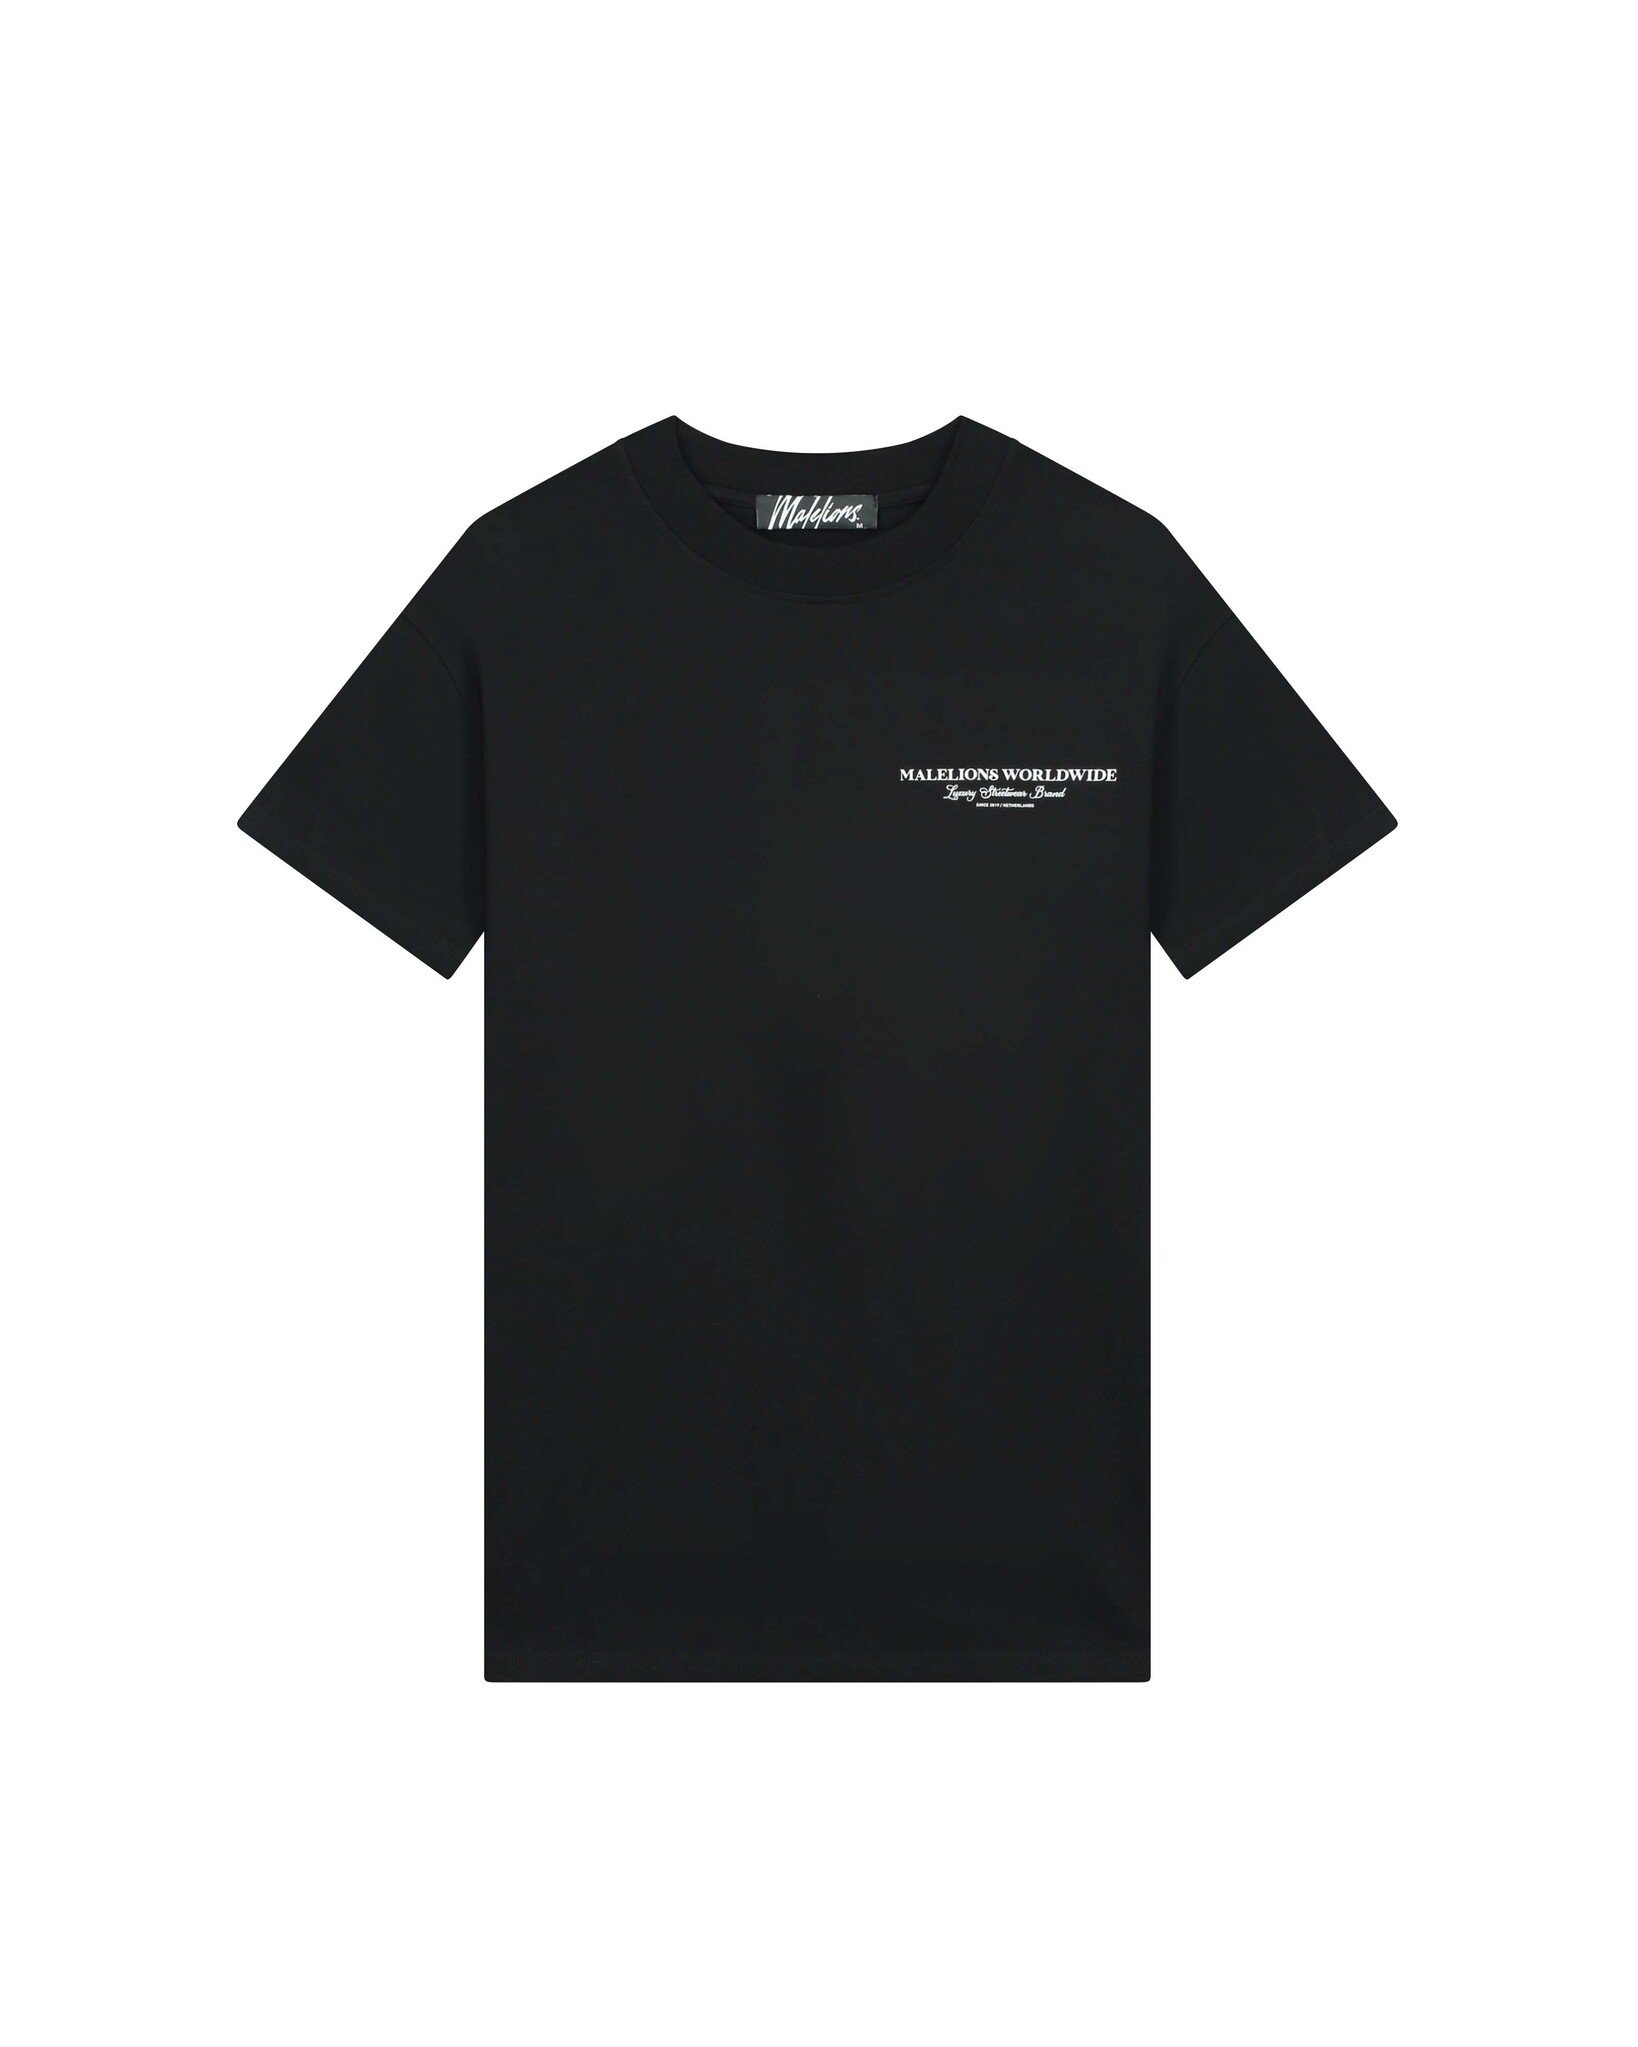 Malelions Men Worldwide T-Shirt - Black/White